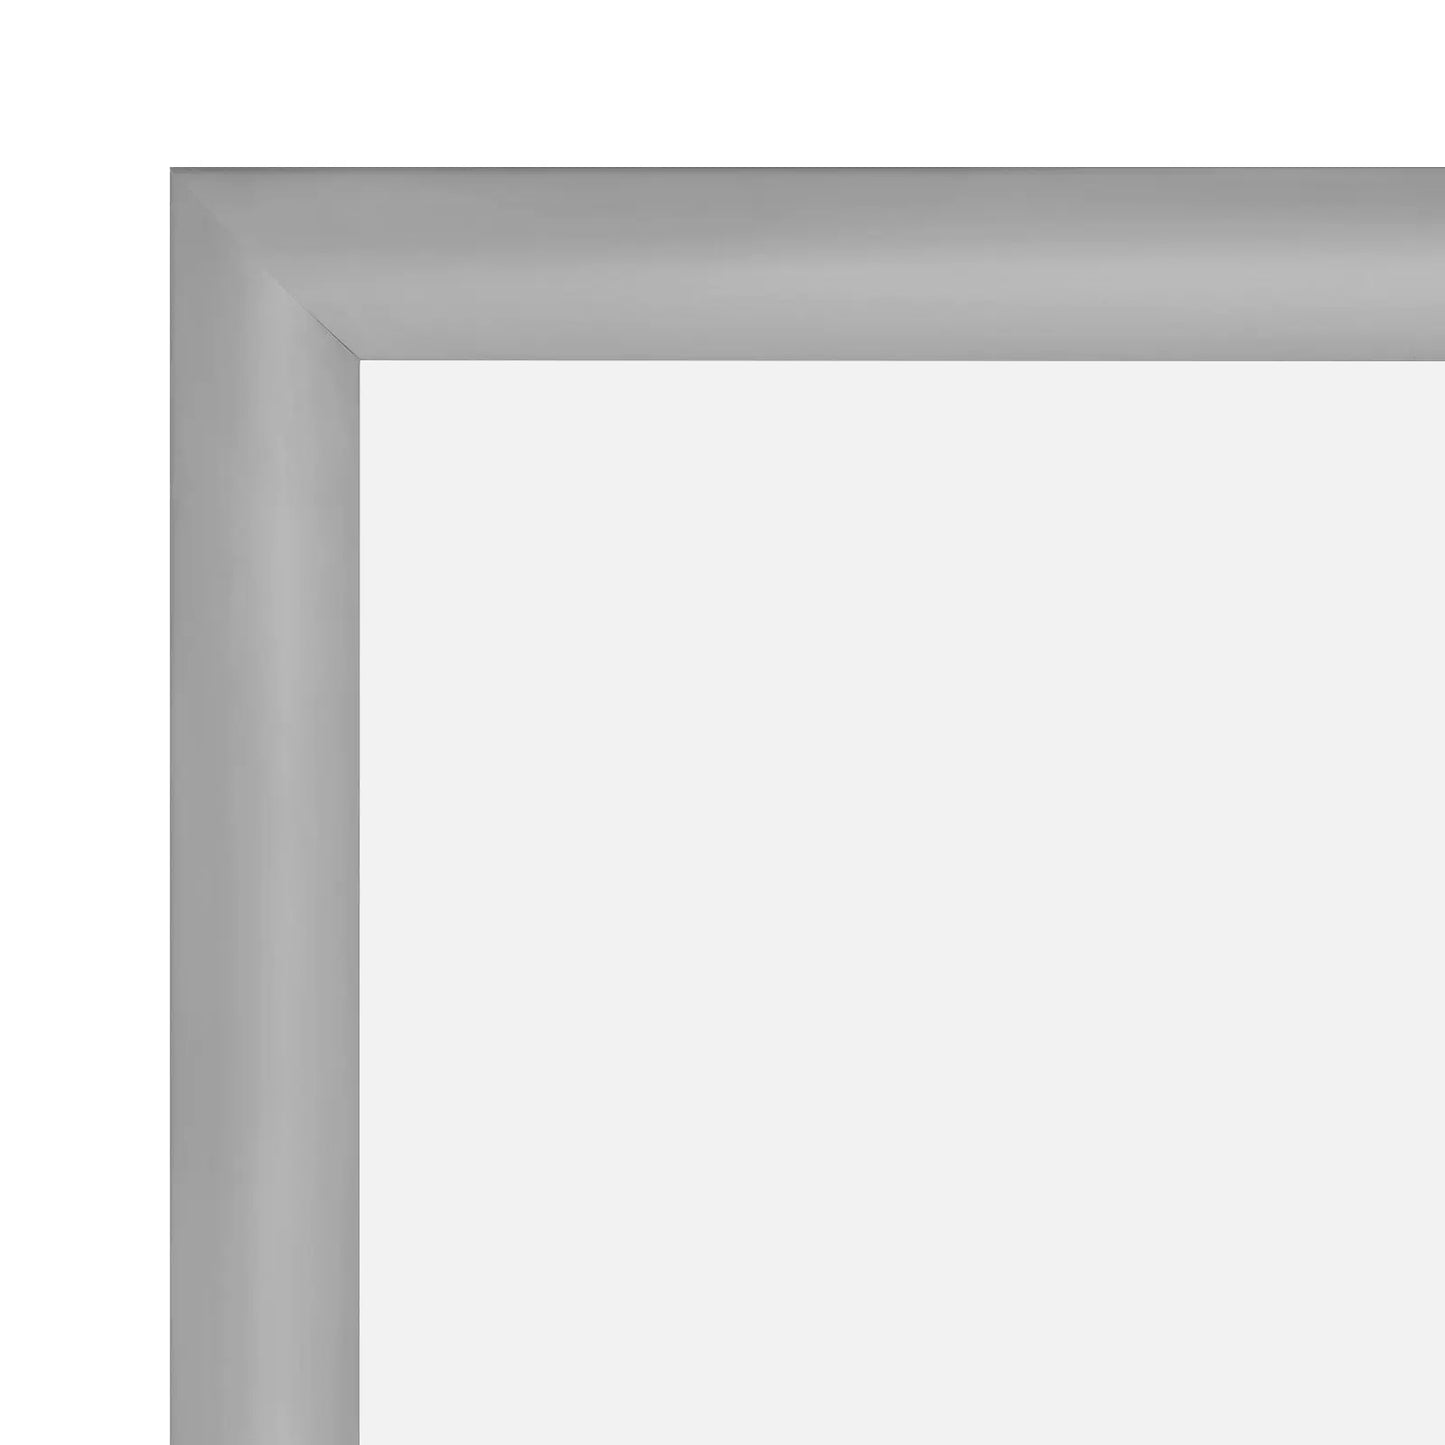 8.5x11 Silver SnapeZo® Snap Frame - 1.2" Profile - Snap Frames Direct